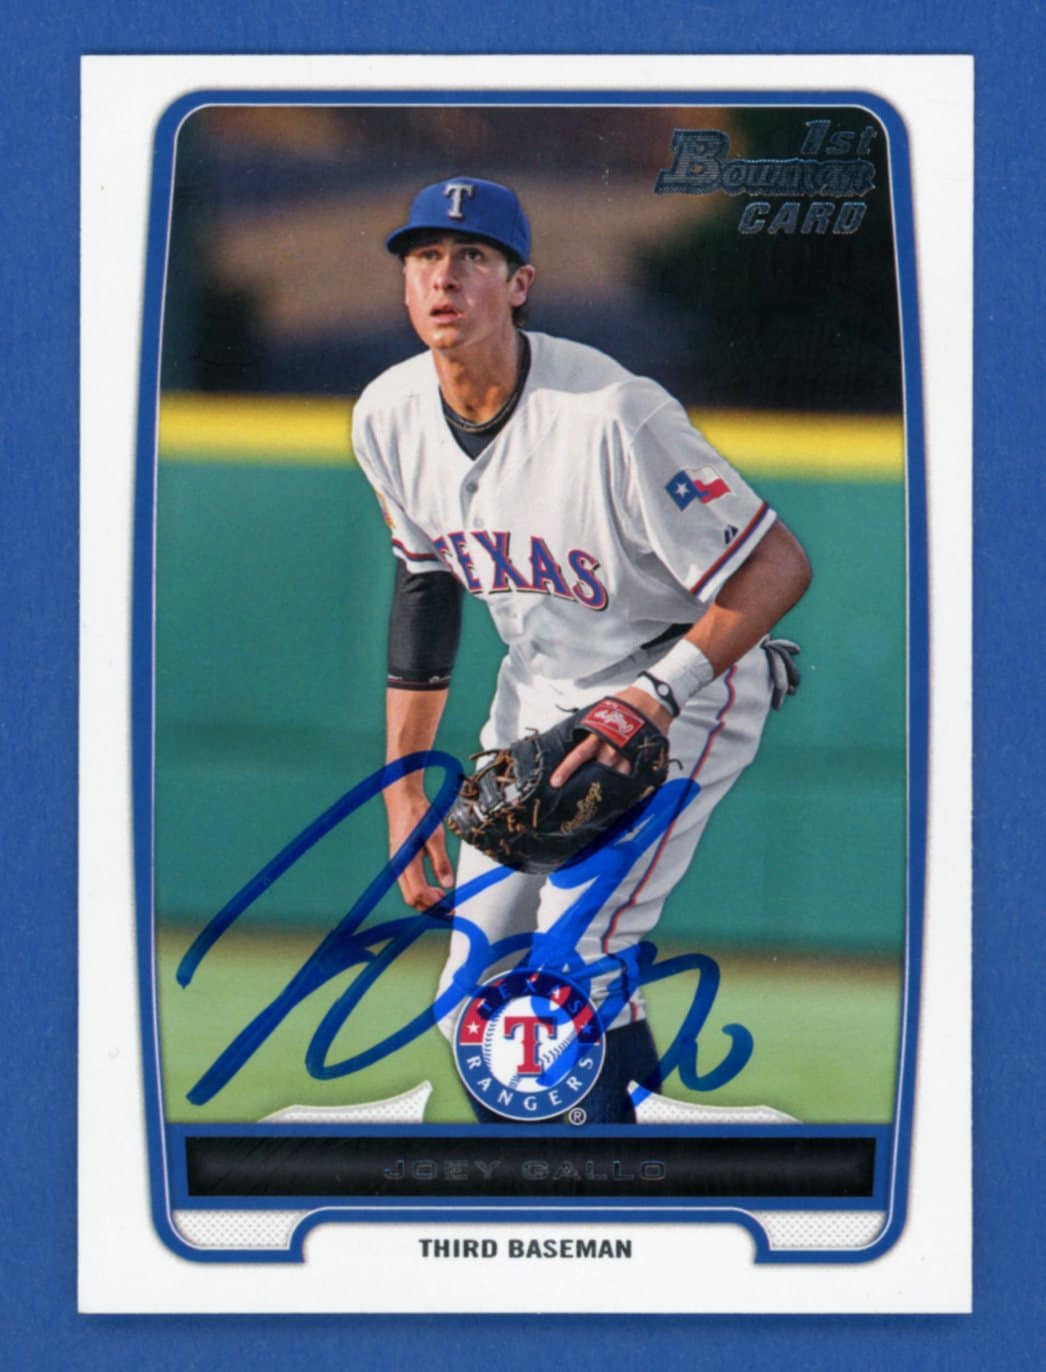  Joey Gallo Texas Rangers Poster Print, Baseball Player